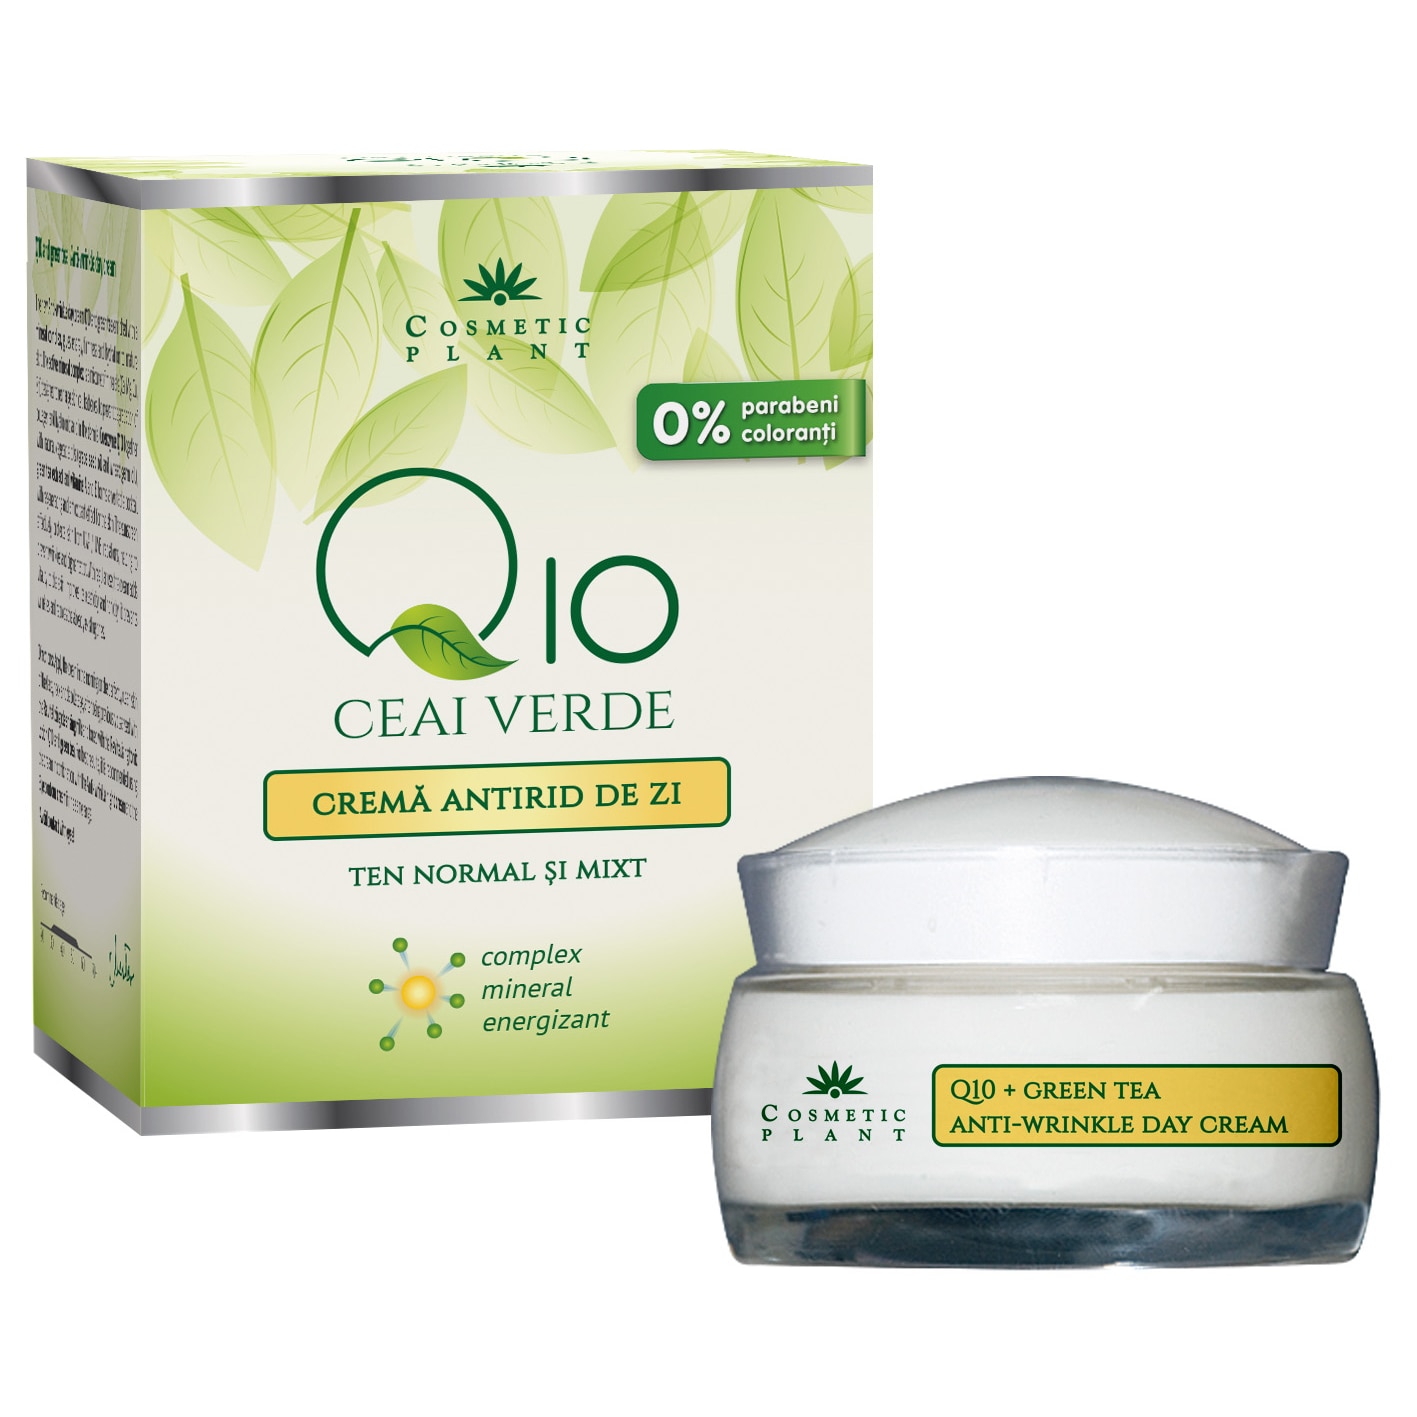 Cosmetic Plant Crema Antirid de Zi Q10 si Ceai Verde | Farmacia Ardealul